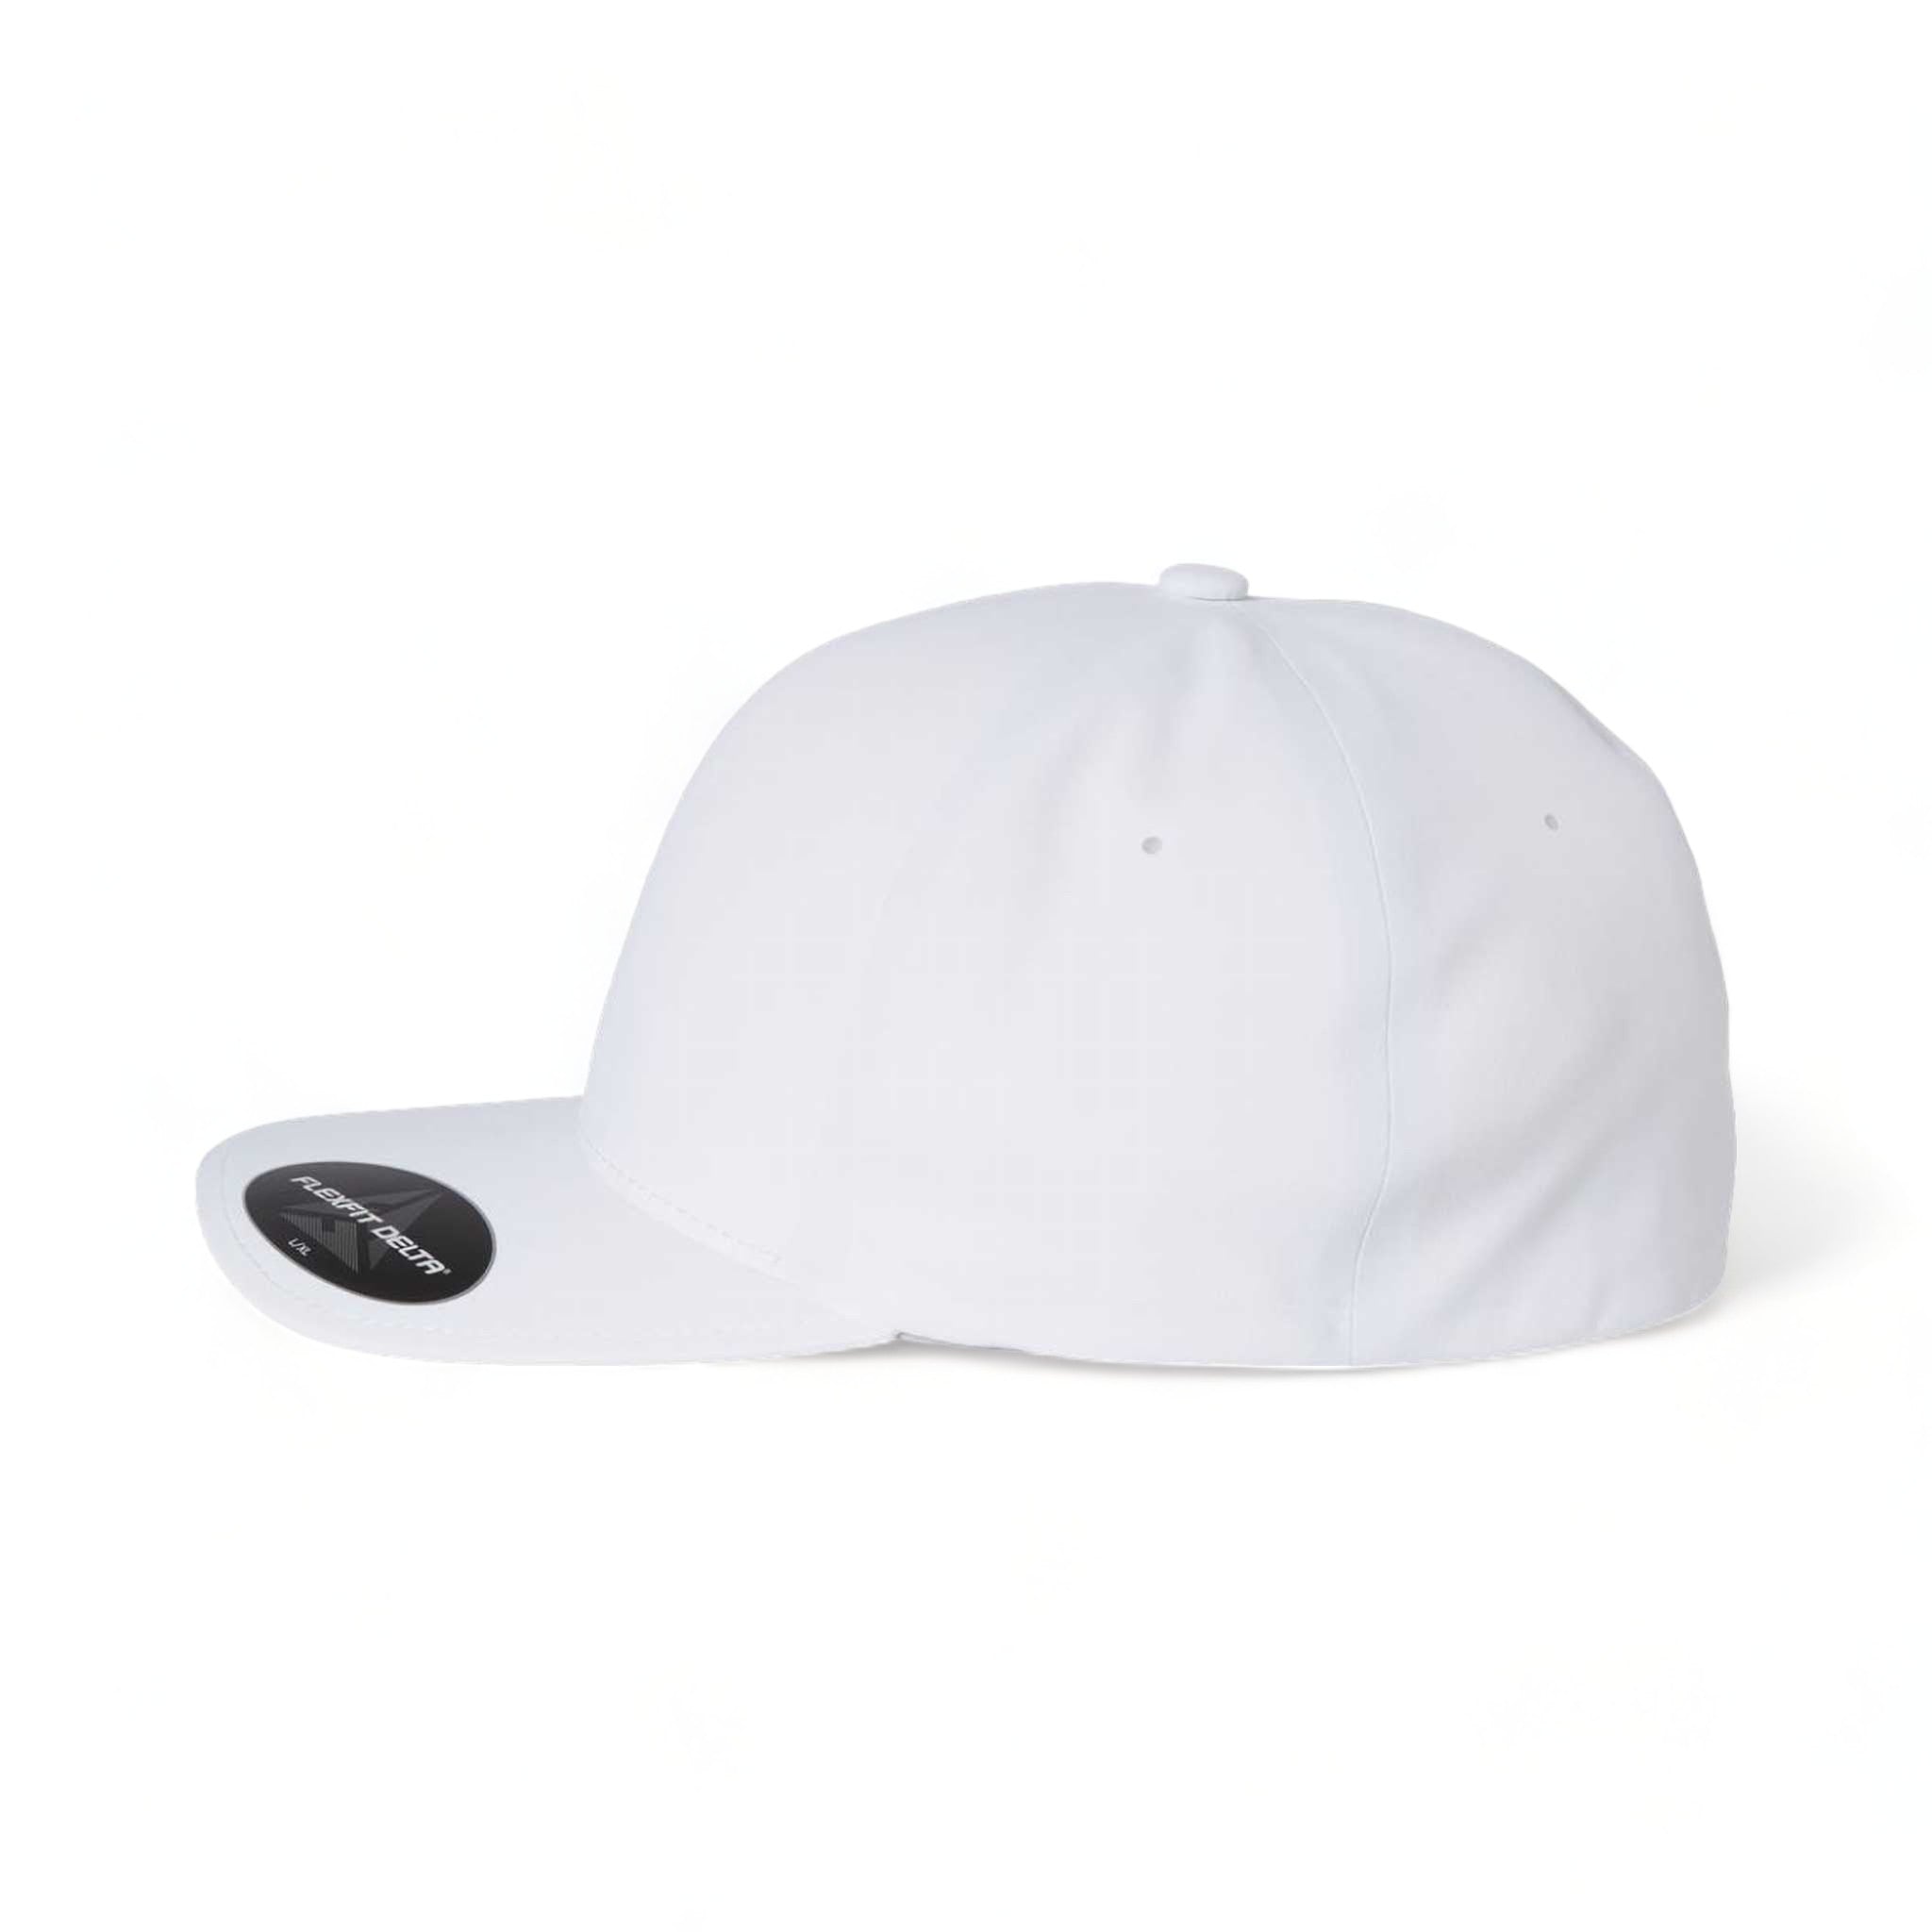 Side view of Flexfit 180 custom hat in white